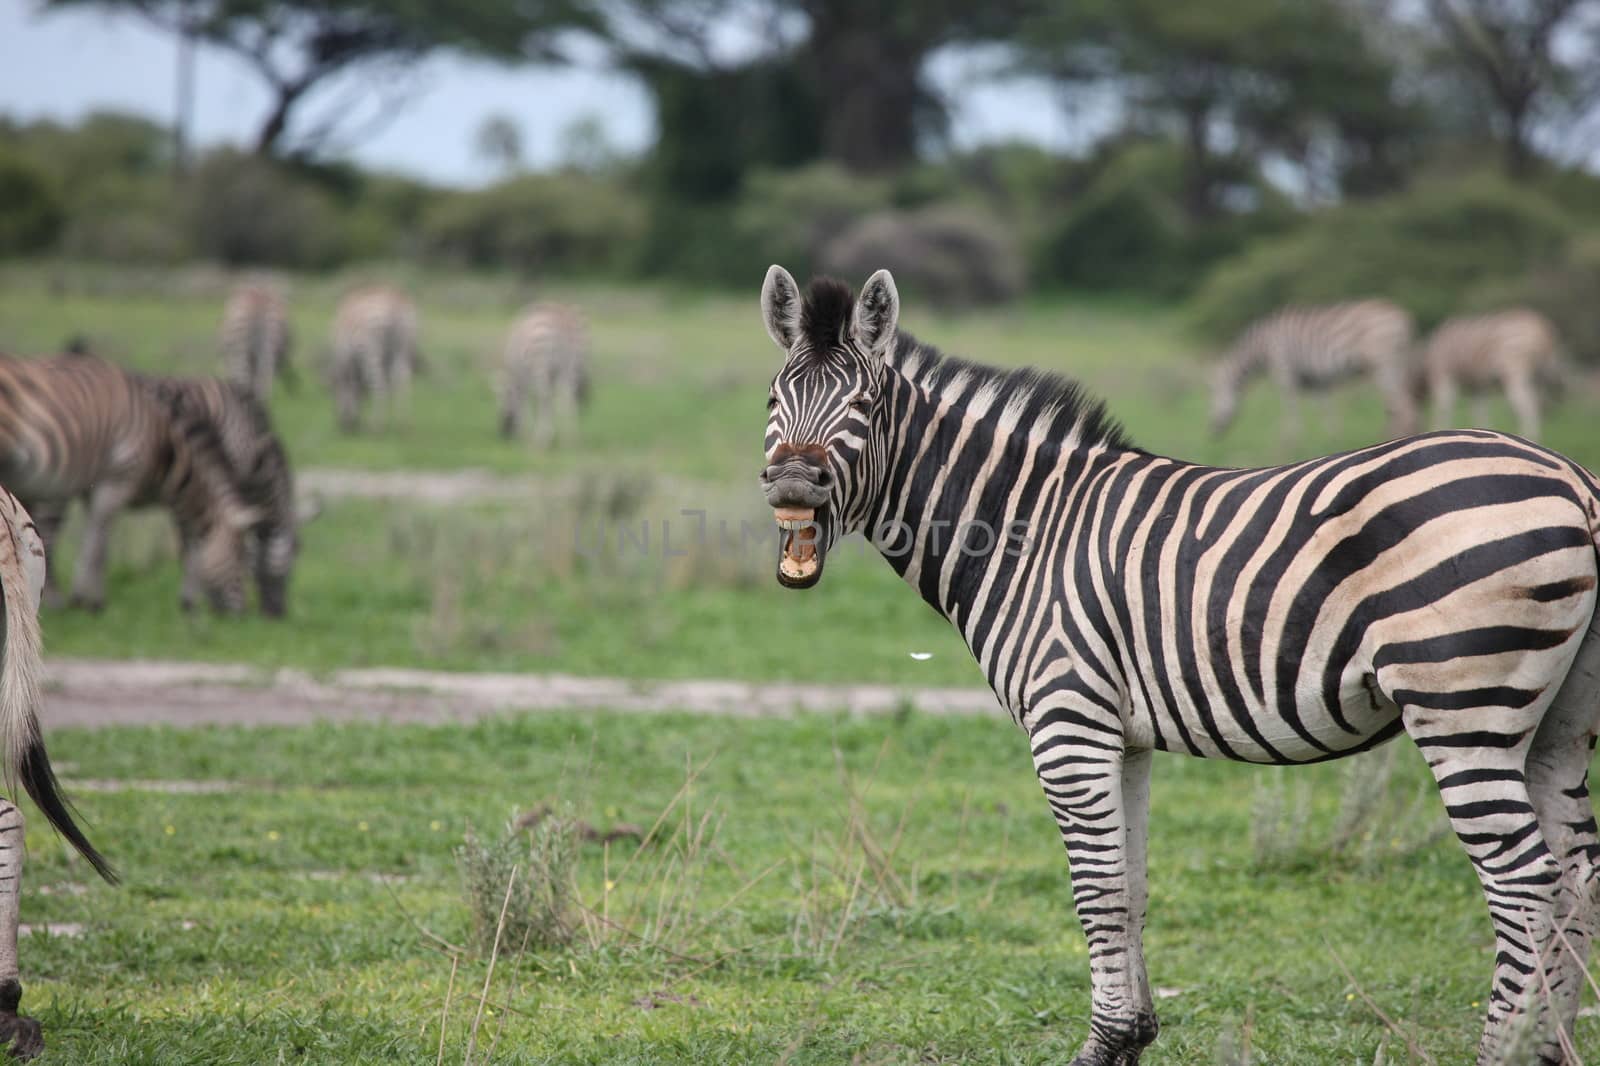 Zebra Botswana Africa savannah wild animal picture by desant7474